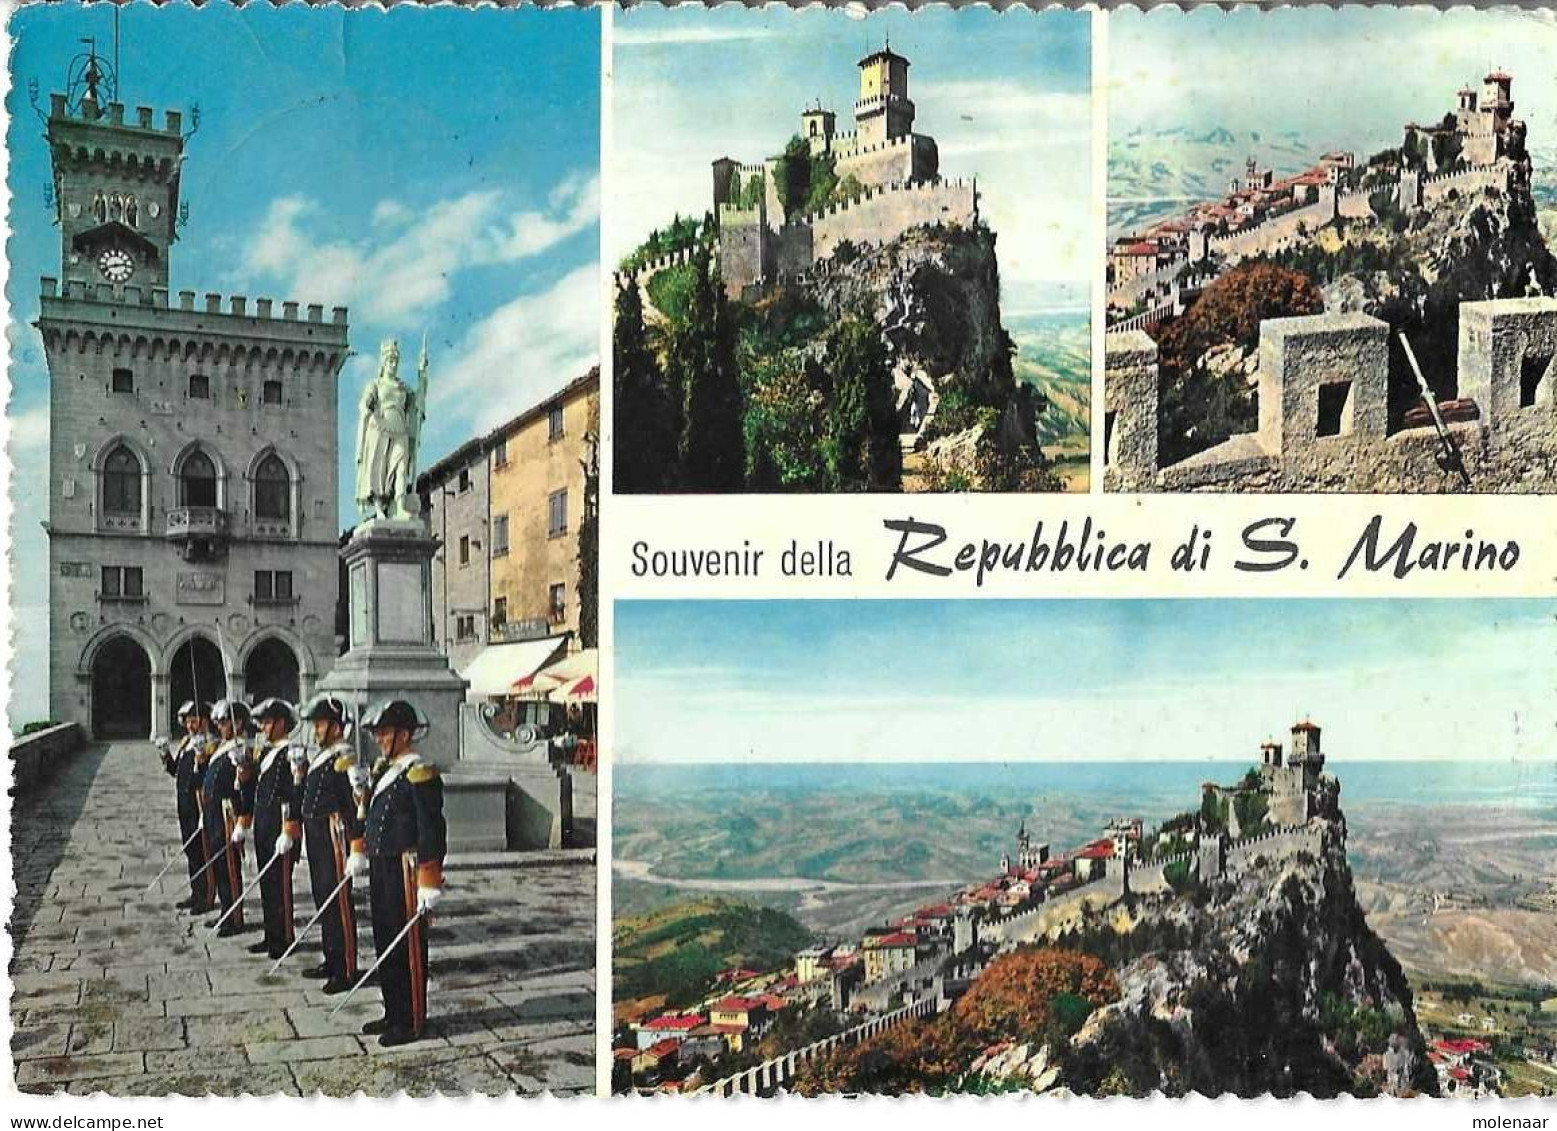 Postzegels > Europa > San Marino > 1940-59 > Kaart Uit 1951 Met 616900a Postzegels (16990) - Storia Postale